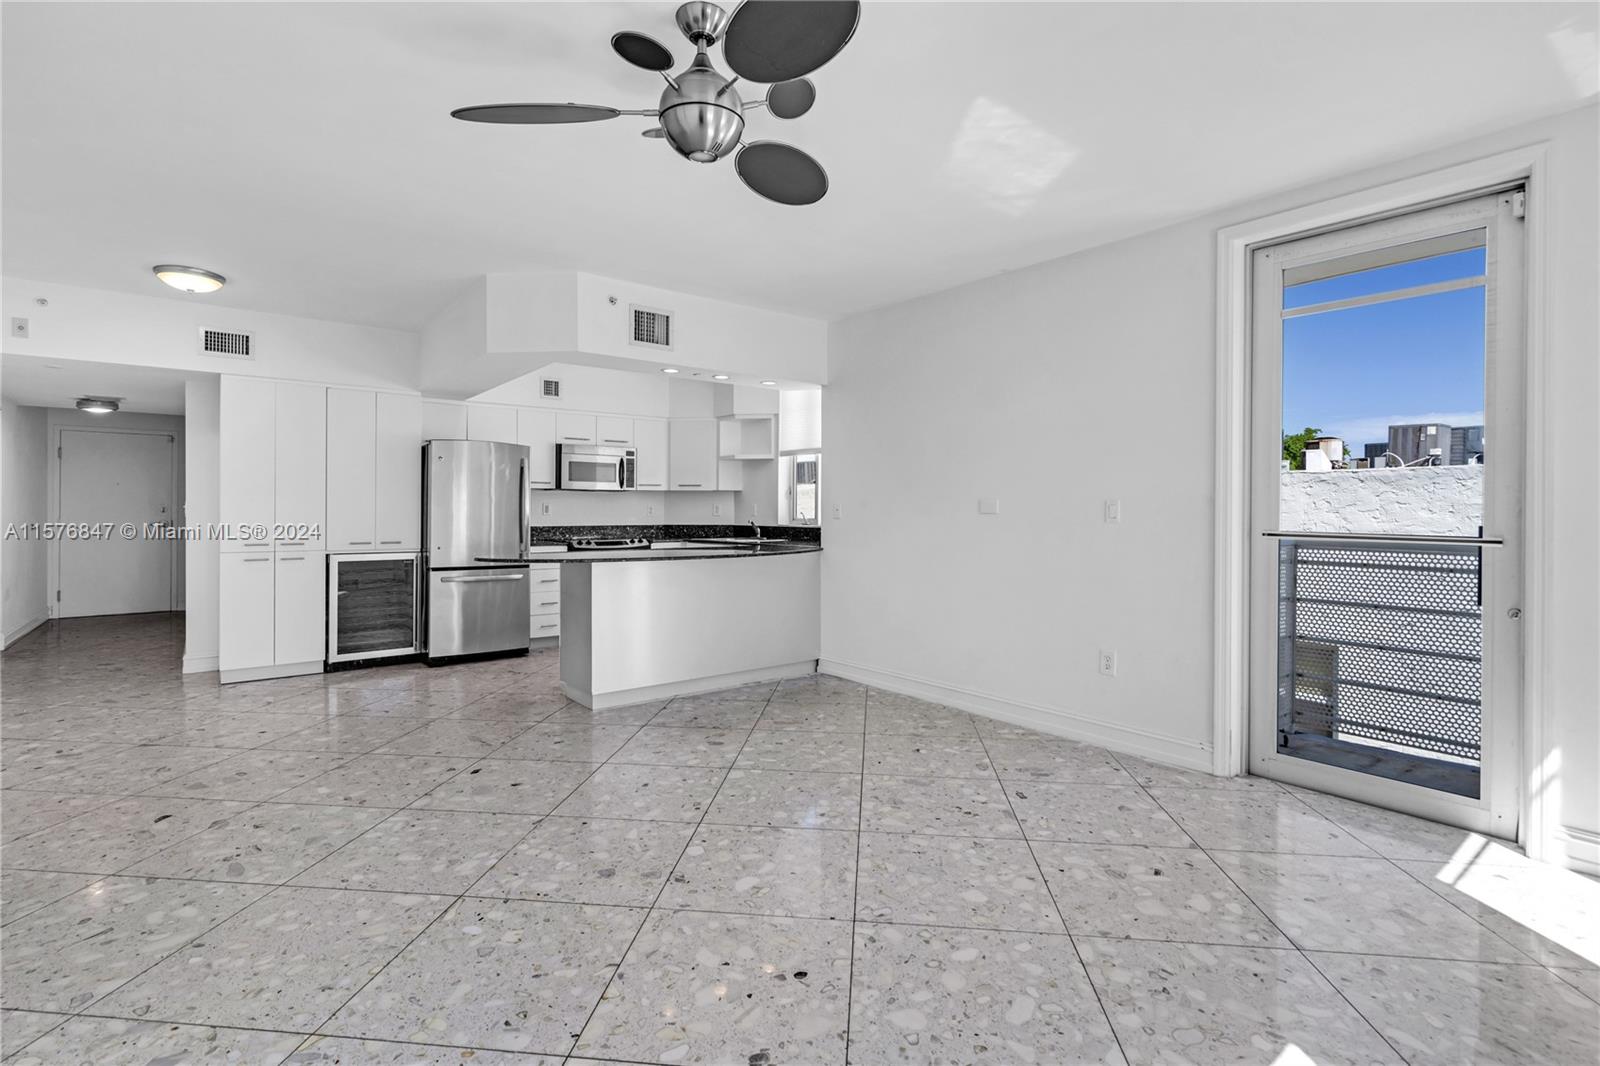 Rental Property at 1532 Drexel Ave 401, Miami Beach, Miami-Dade County, Florida - Bedrooms: 2 
Bathrooms: 2  - $3,650 MO.